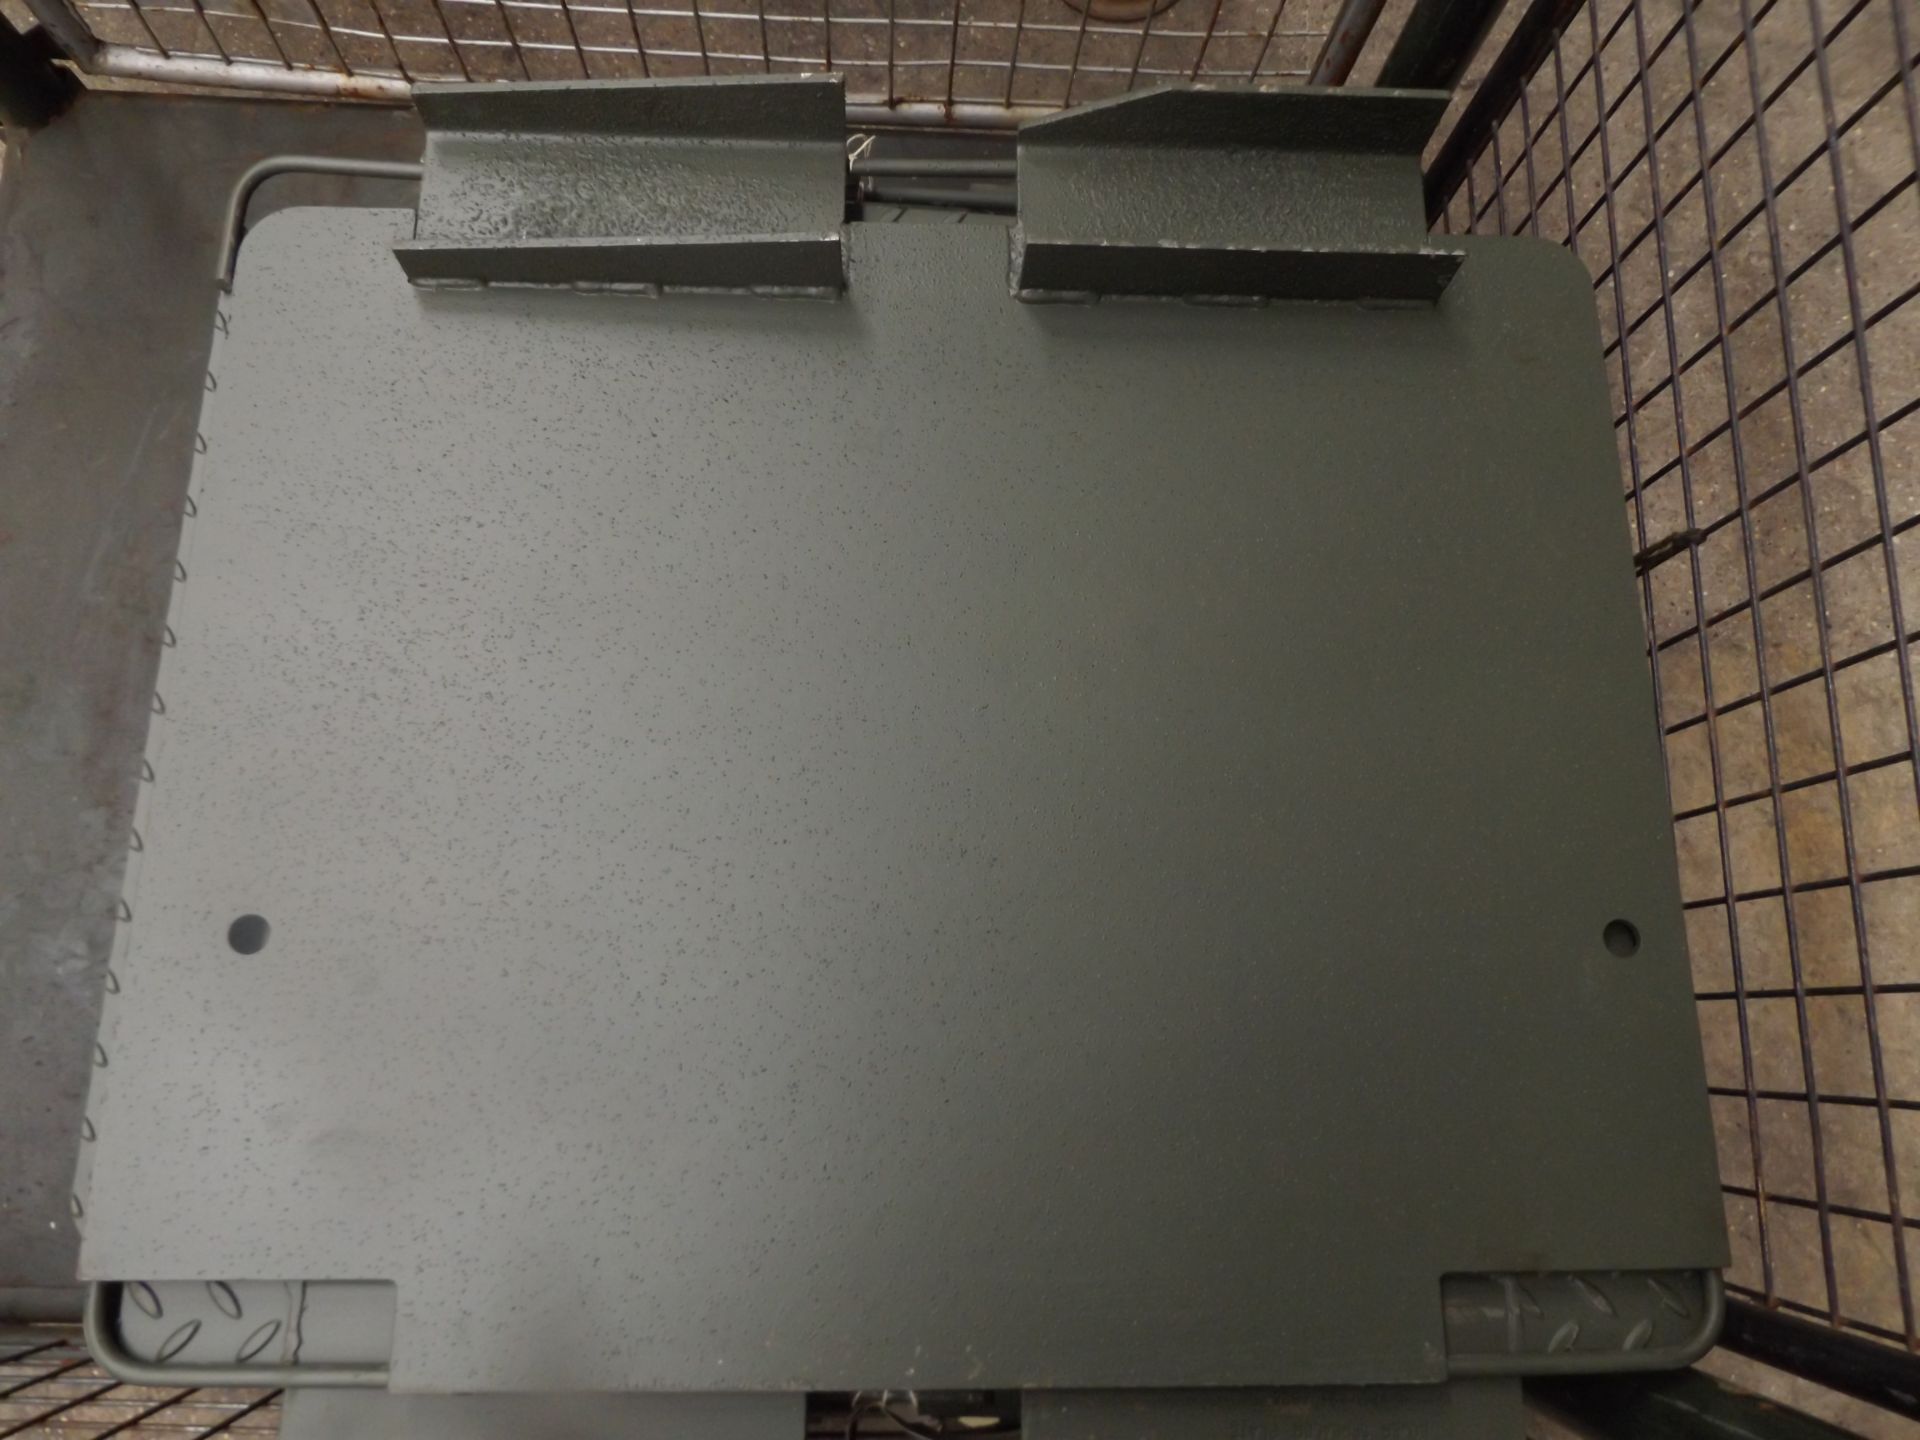 10 x Entwistle Load Spreader Plates P/No FV2176536 - Image 3 of 6